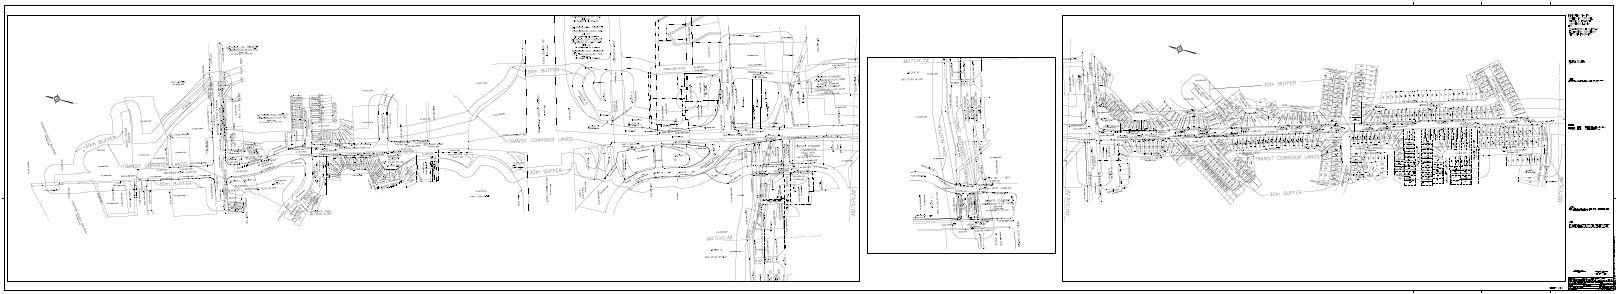 Scarborough Subway Extension Map - Sheet 1 of 5